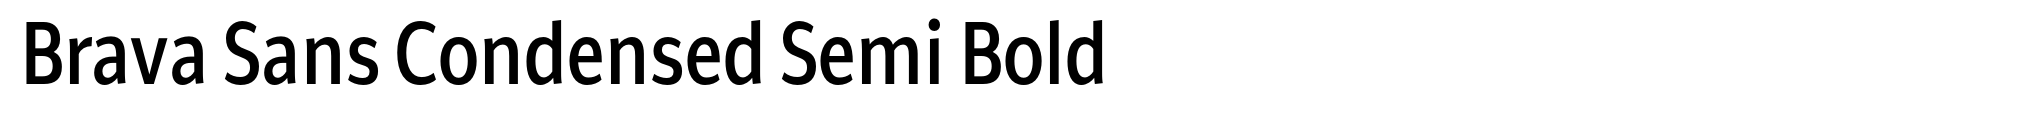 Brava Sans Condensed Semi Bold image